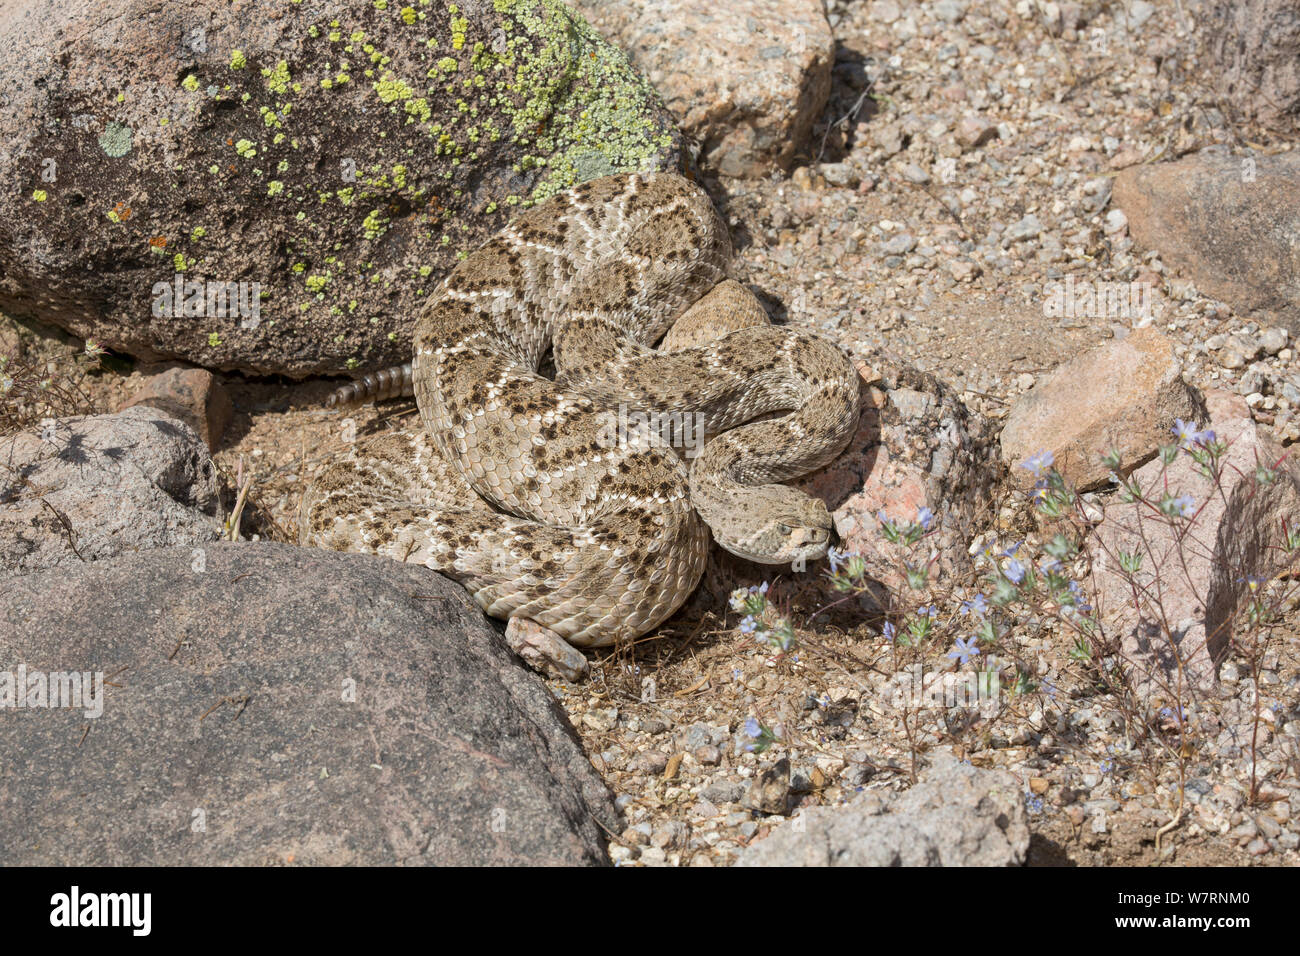 Western Diamondback Rattlesnake (Crotalus atrox) by a patch of Miniature Woolystar (Eriastrum diffusum) in the Sonoran Desert, Mesa, Arizona, USA Stock Photo